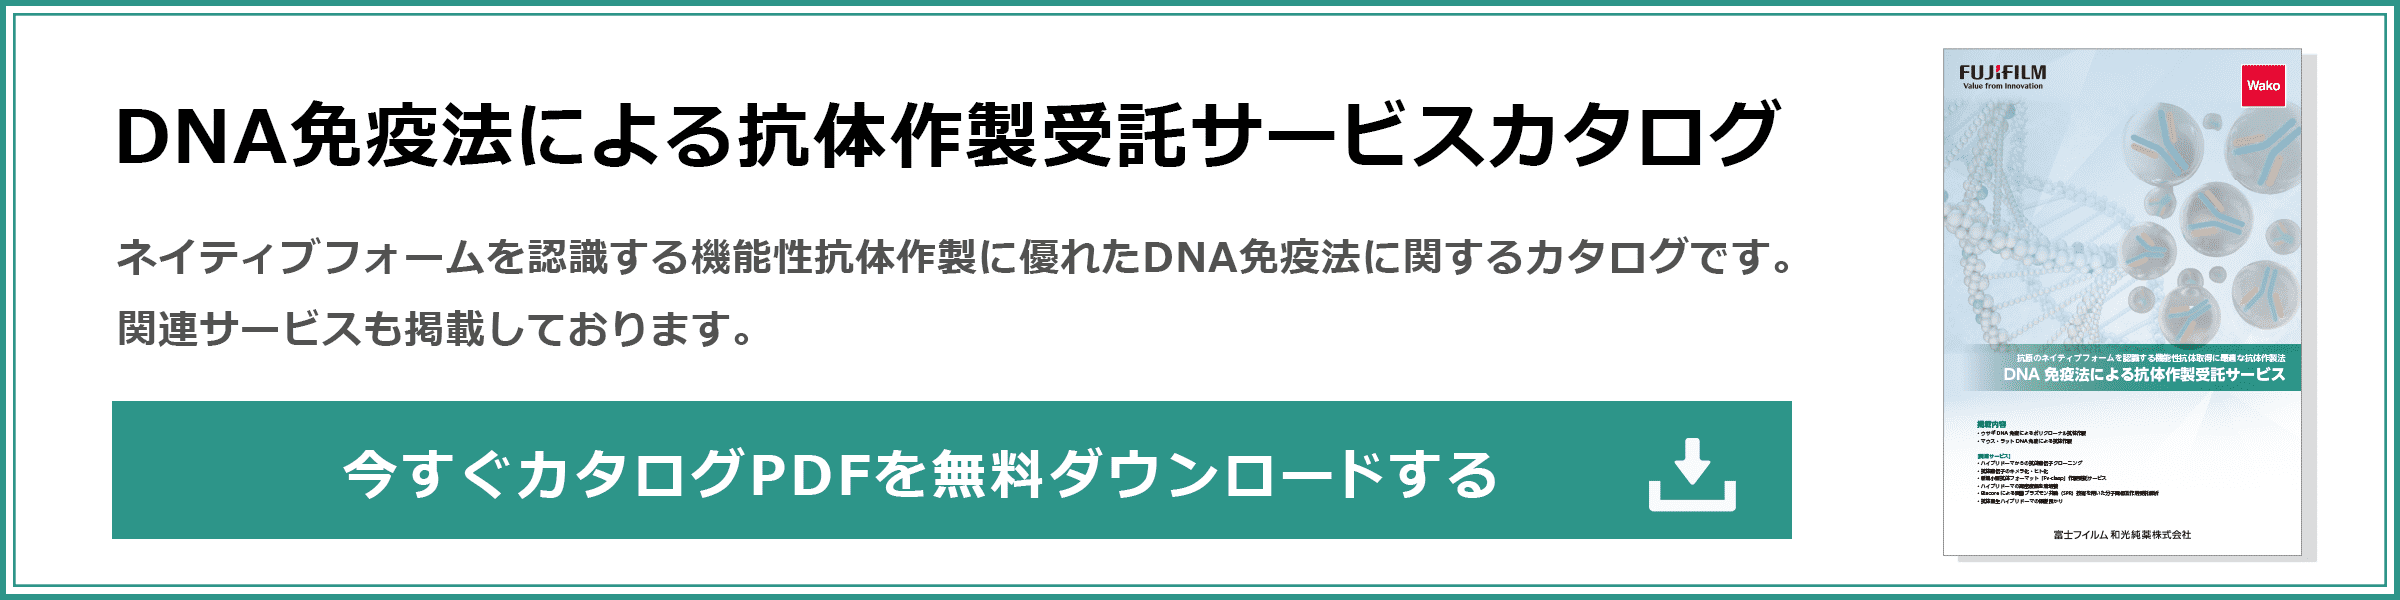 『DNA免疫法による抗体作製受託サービスカタログ』ダウンロードページへ